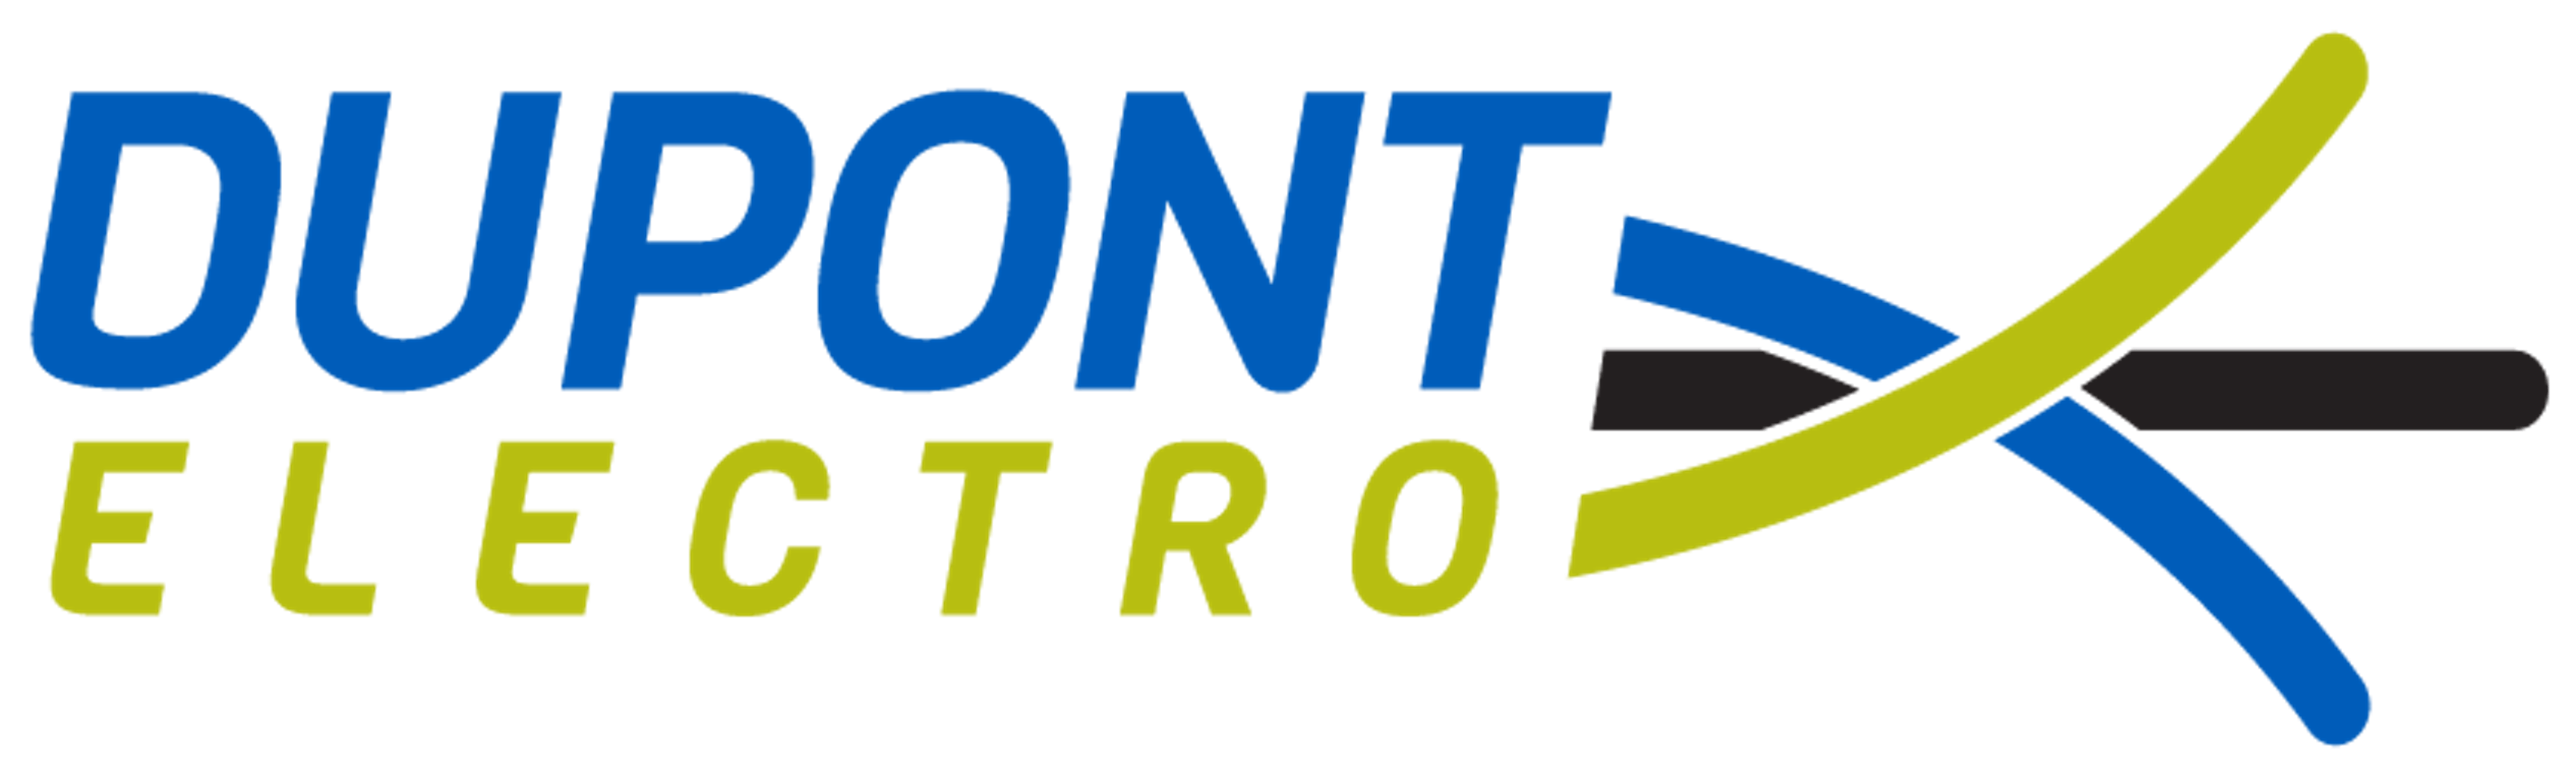 Electro Dupont logo